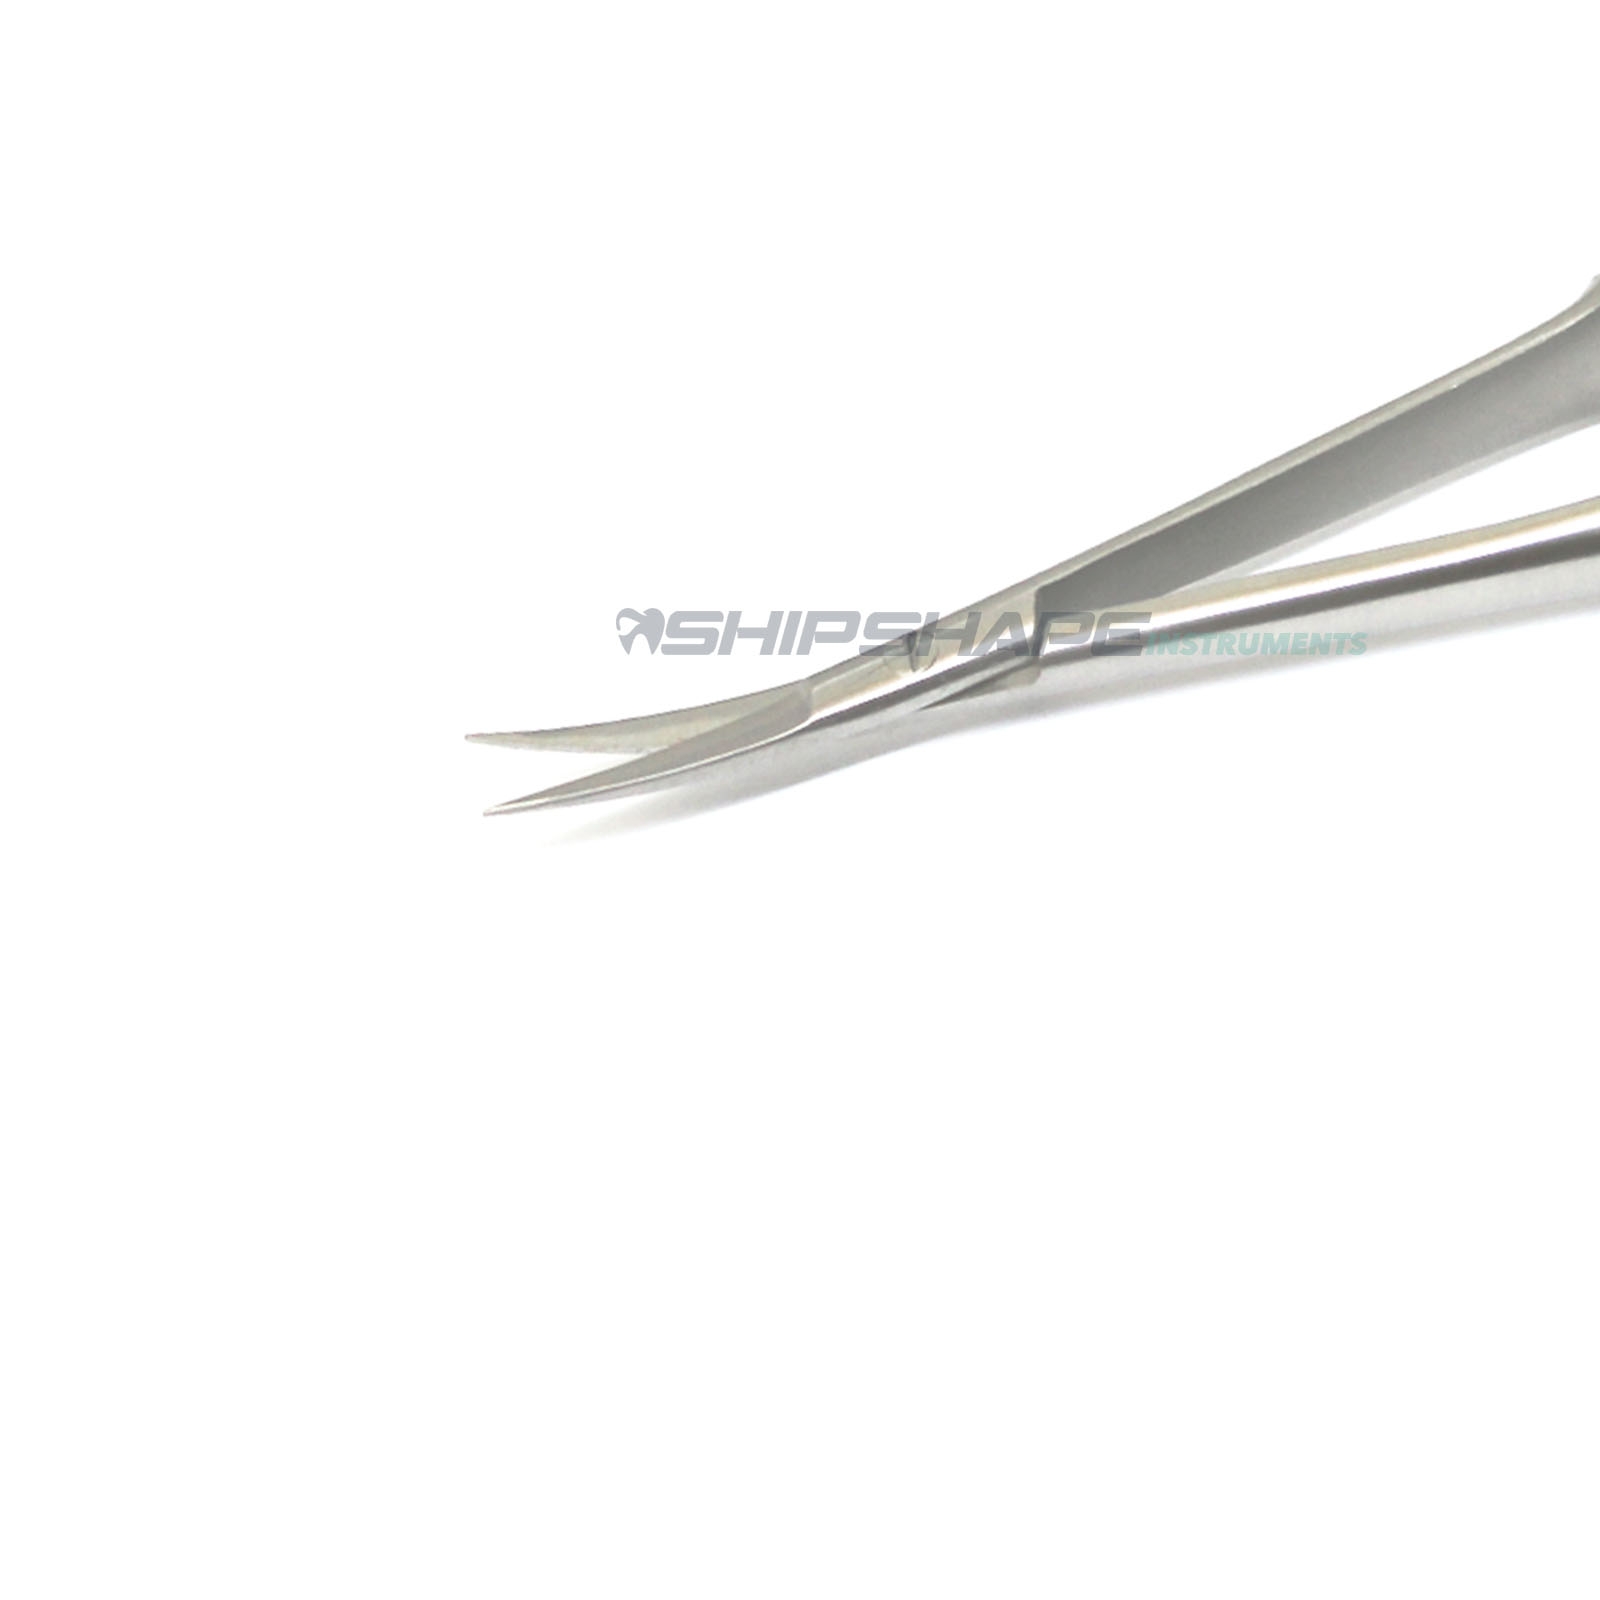 Castroviejo Needle Holder with Lock, Micro Spring Scissor, Gerald Tissue Forcep Dental Steel Instruments-1204